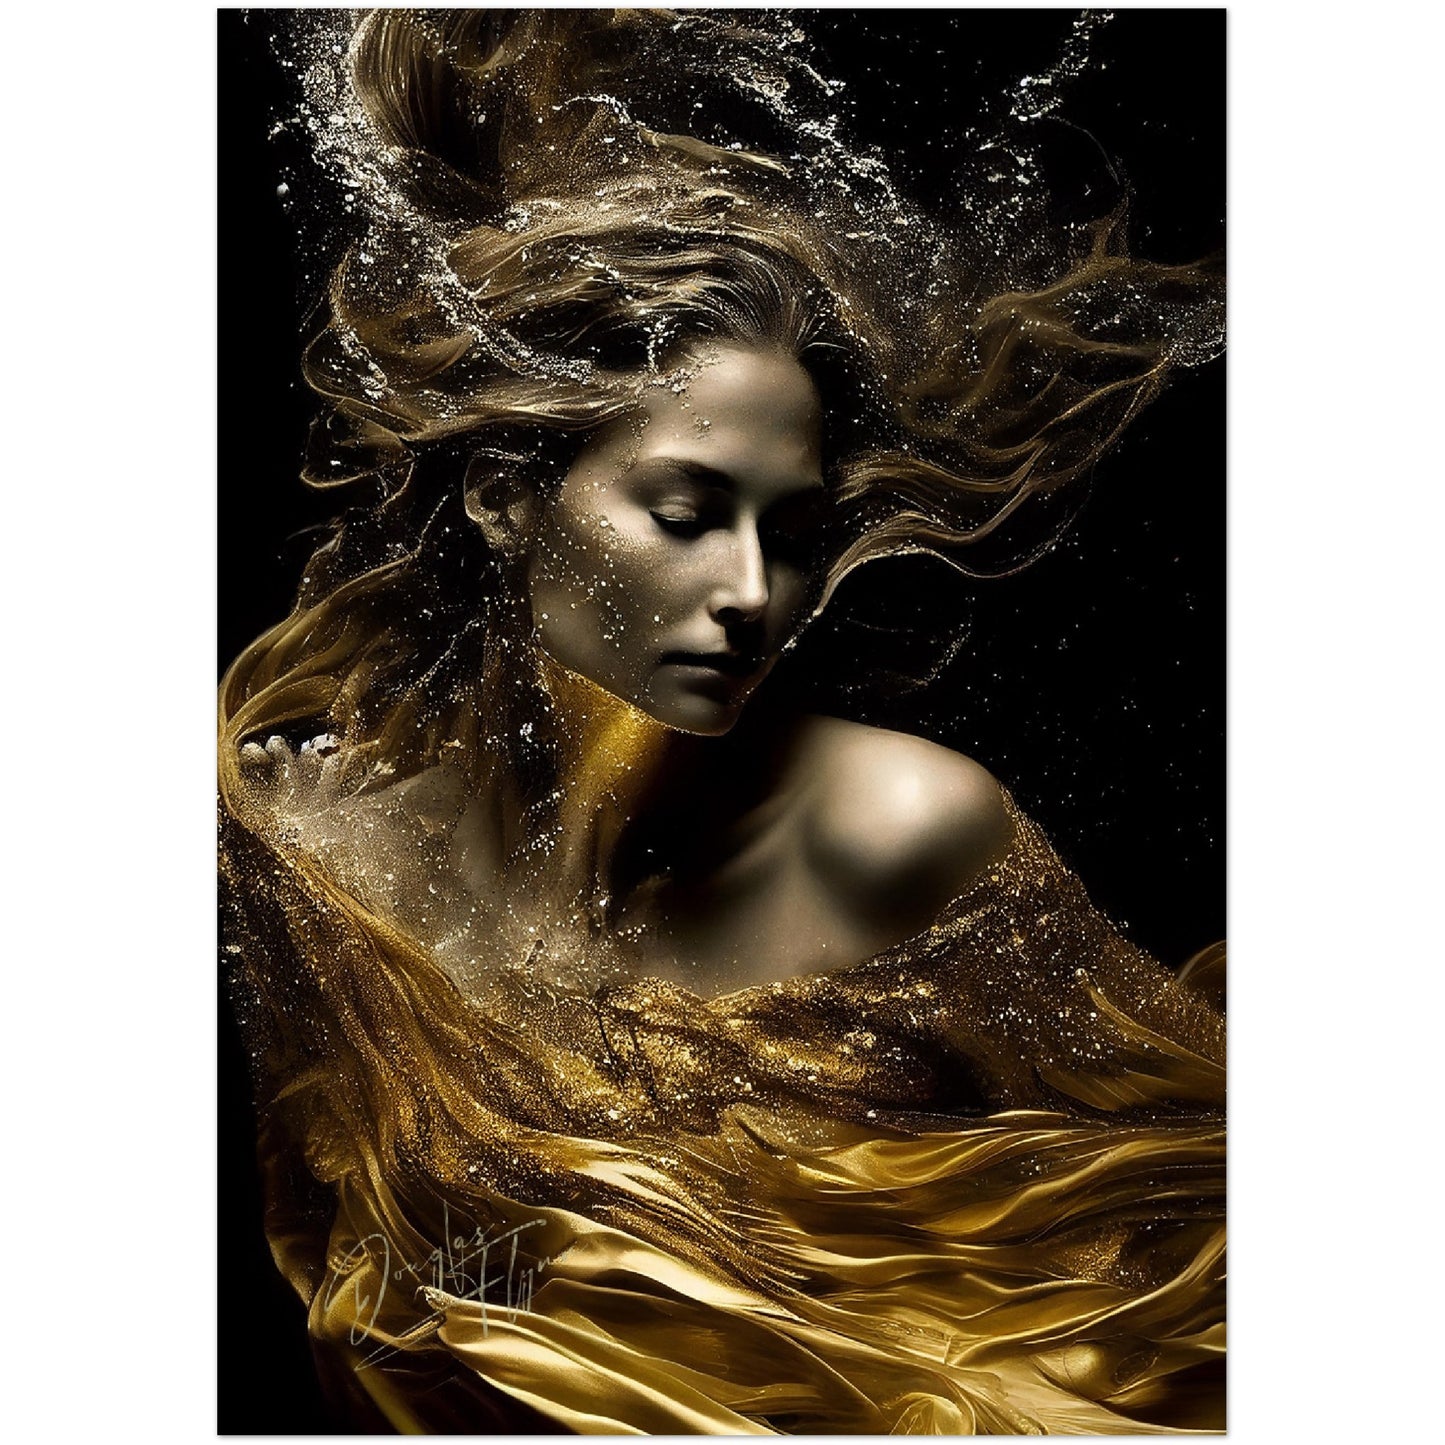 »Golden Mermaid Couture« retro poster